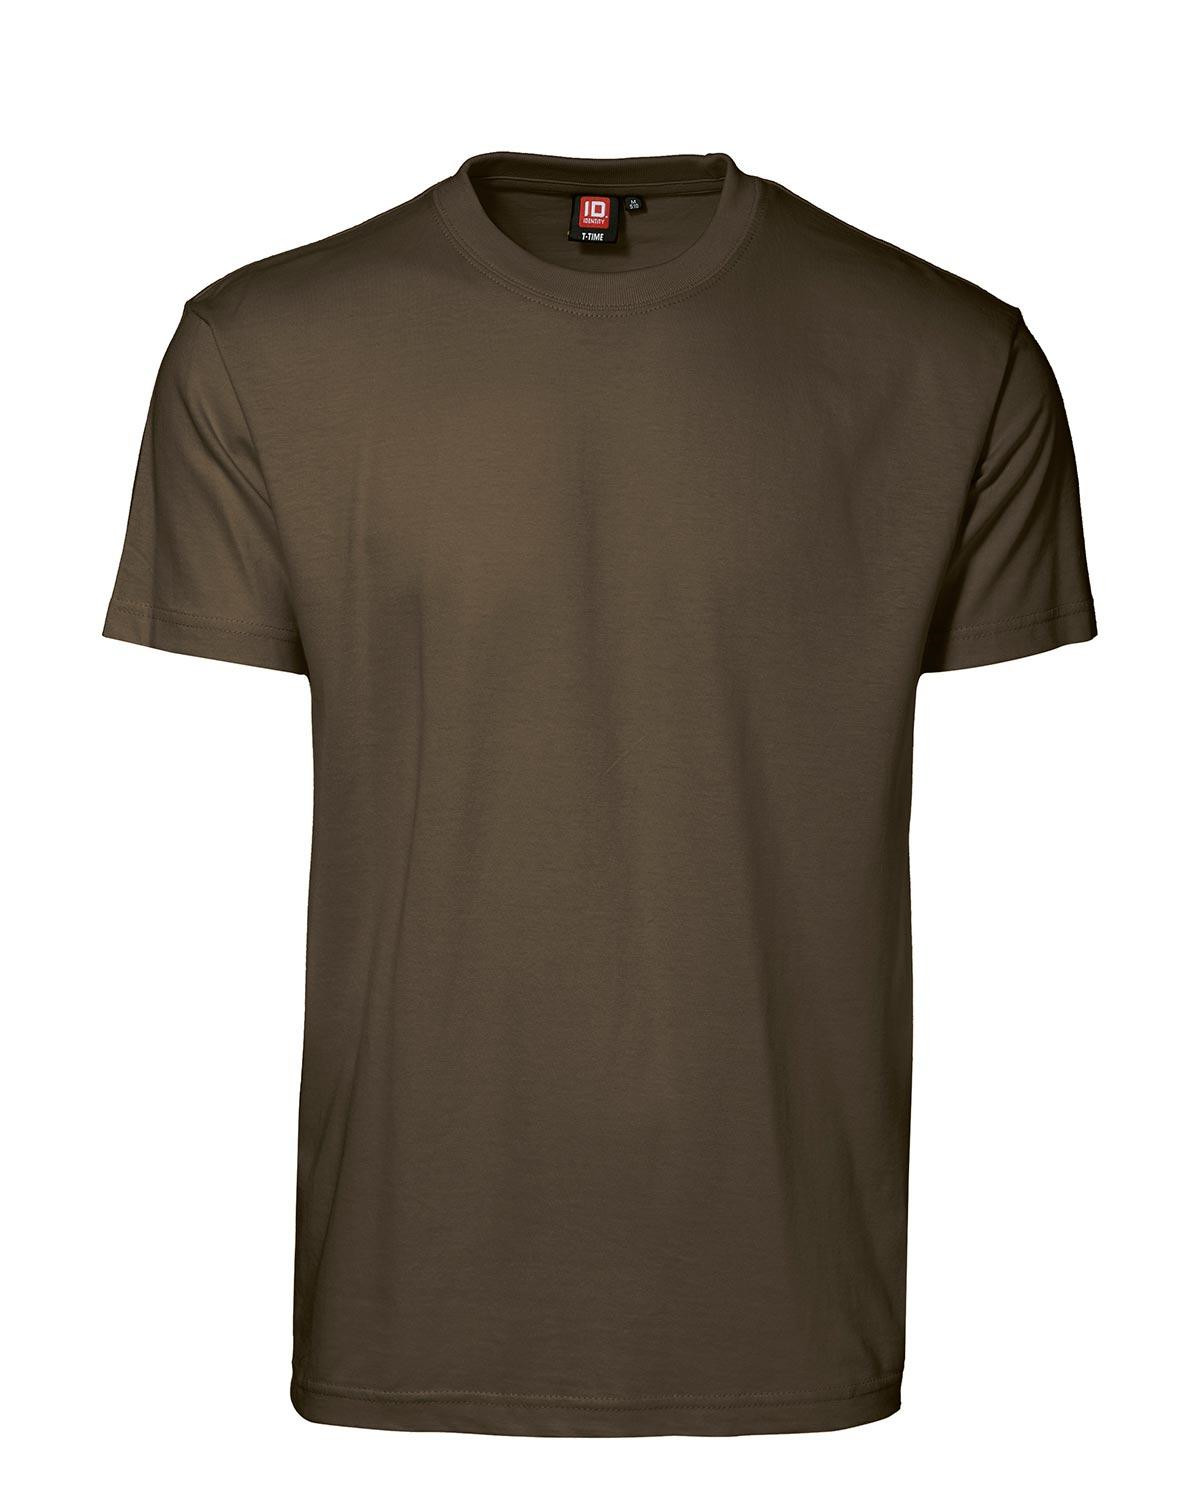 Billede af ID T-Time T-shirt, rund hals (Oliven, 2XL) hos Army Star